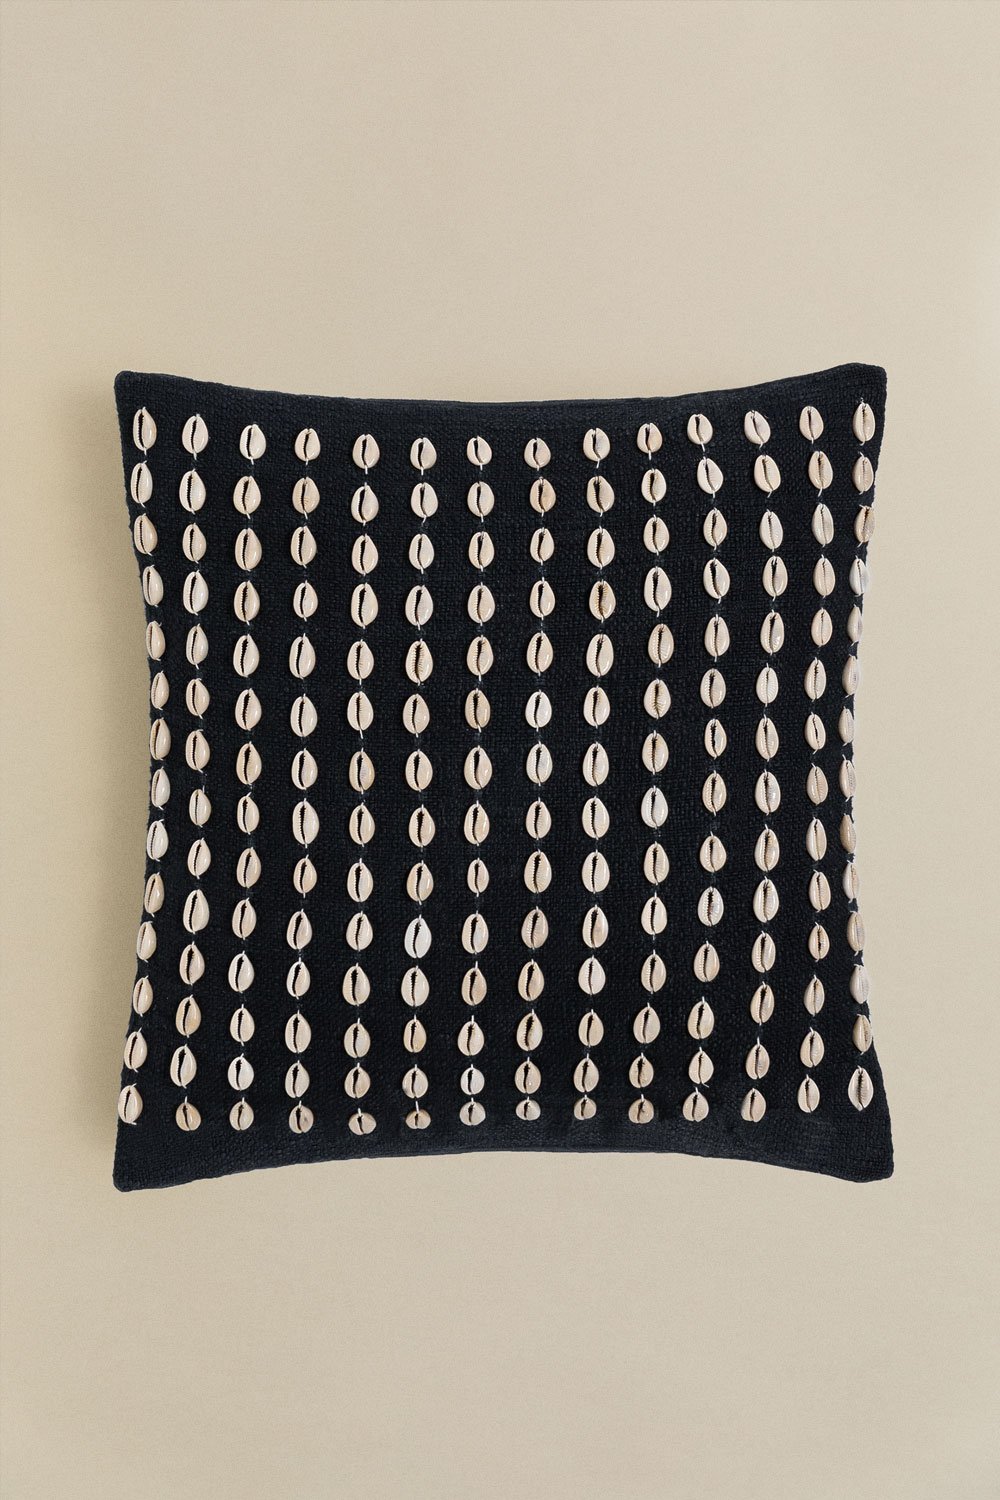 Square Cotton Cushion (45x45 cm) Brusquel, gallery image 1